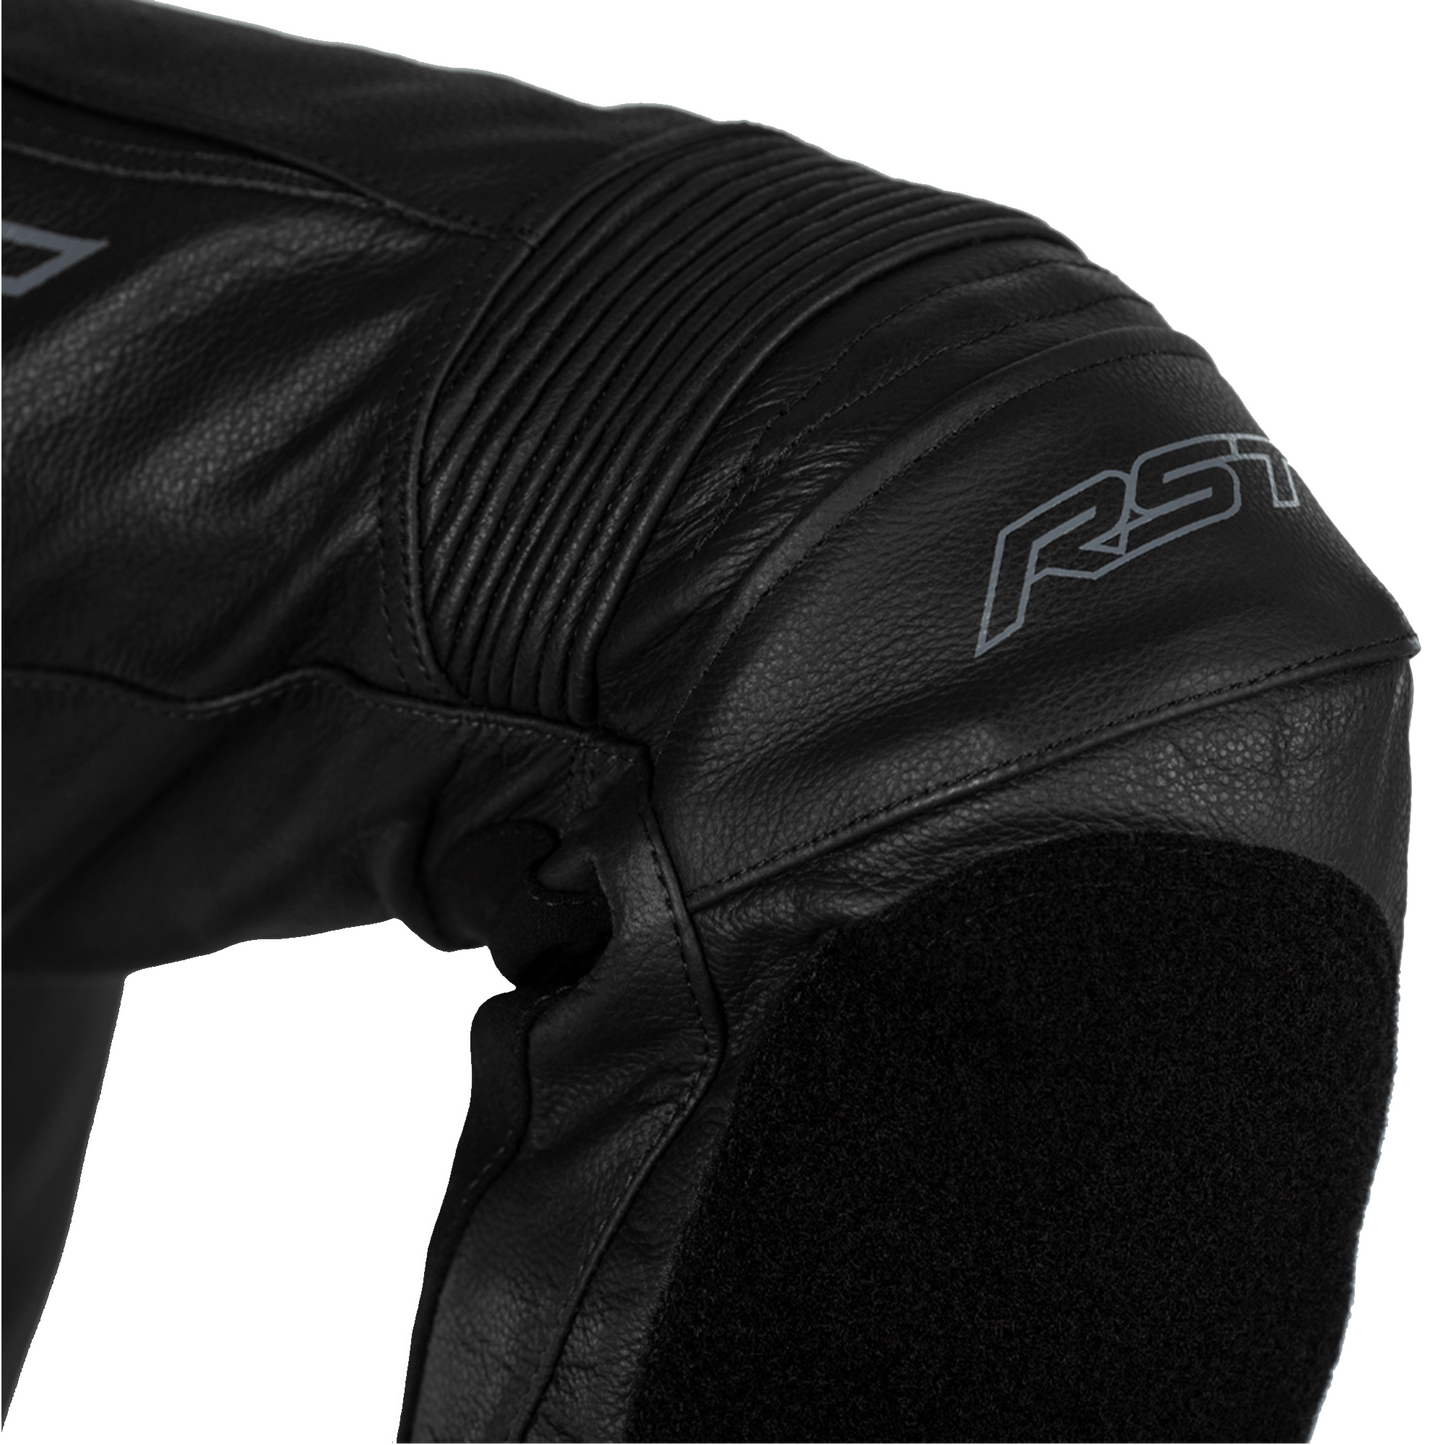 RST Podium Airbag (CE) One Piece Leather Suit - Black (2522)